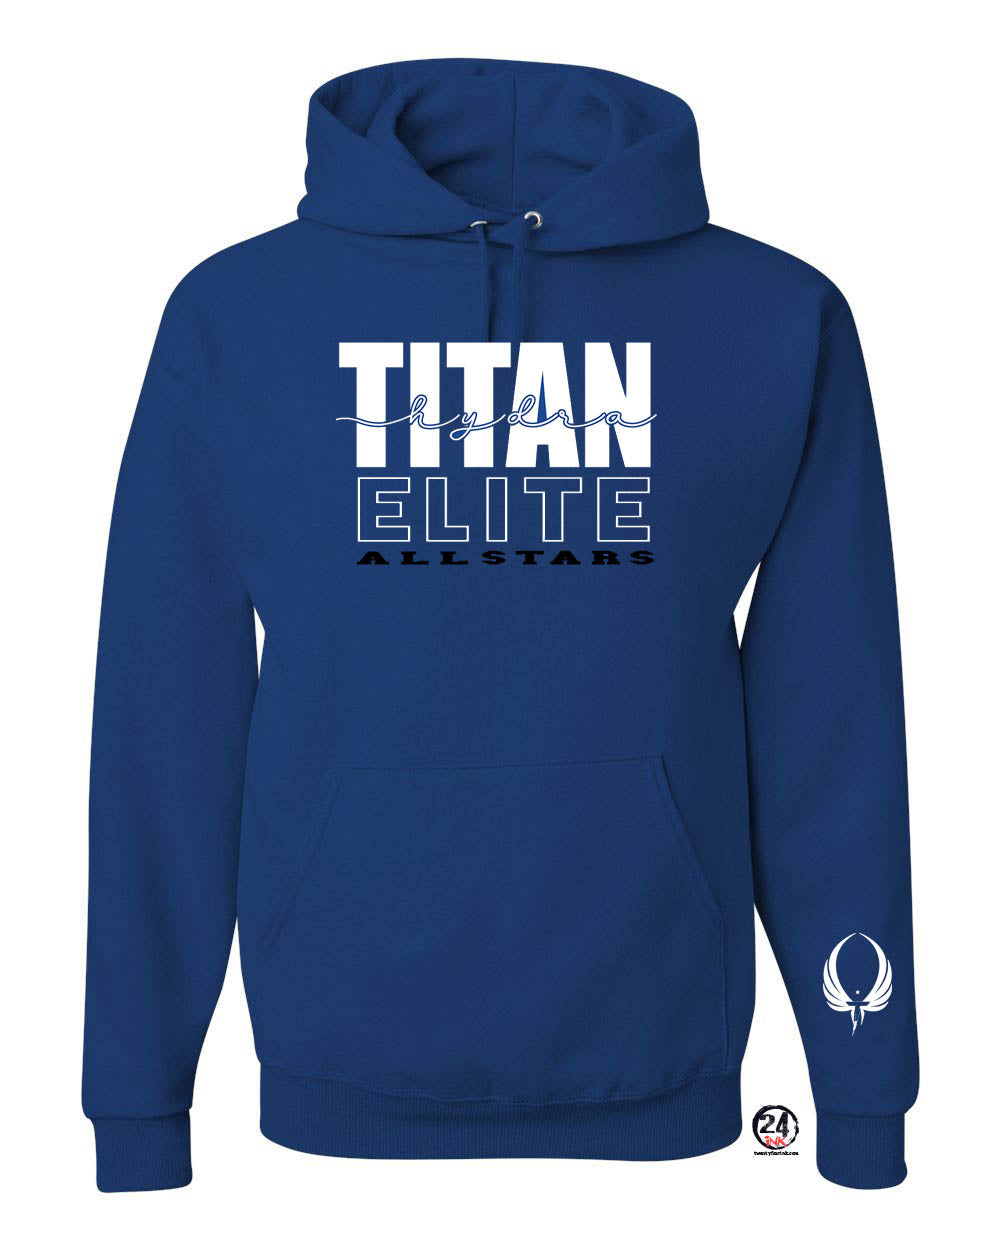 Titan Design 16 Hooded Sweatshirt